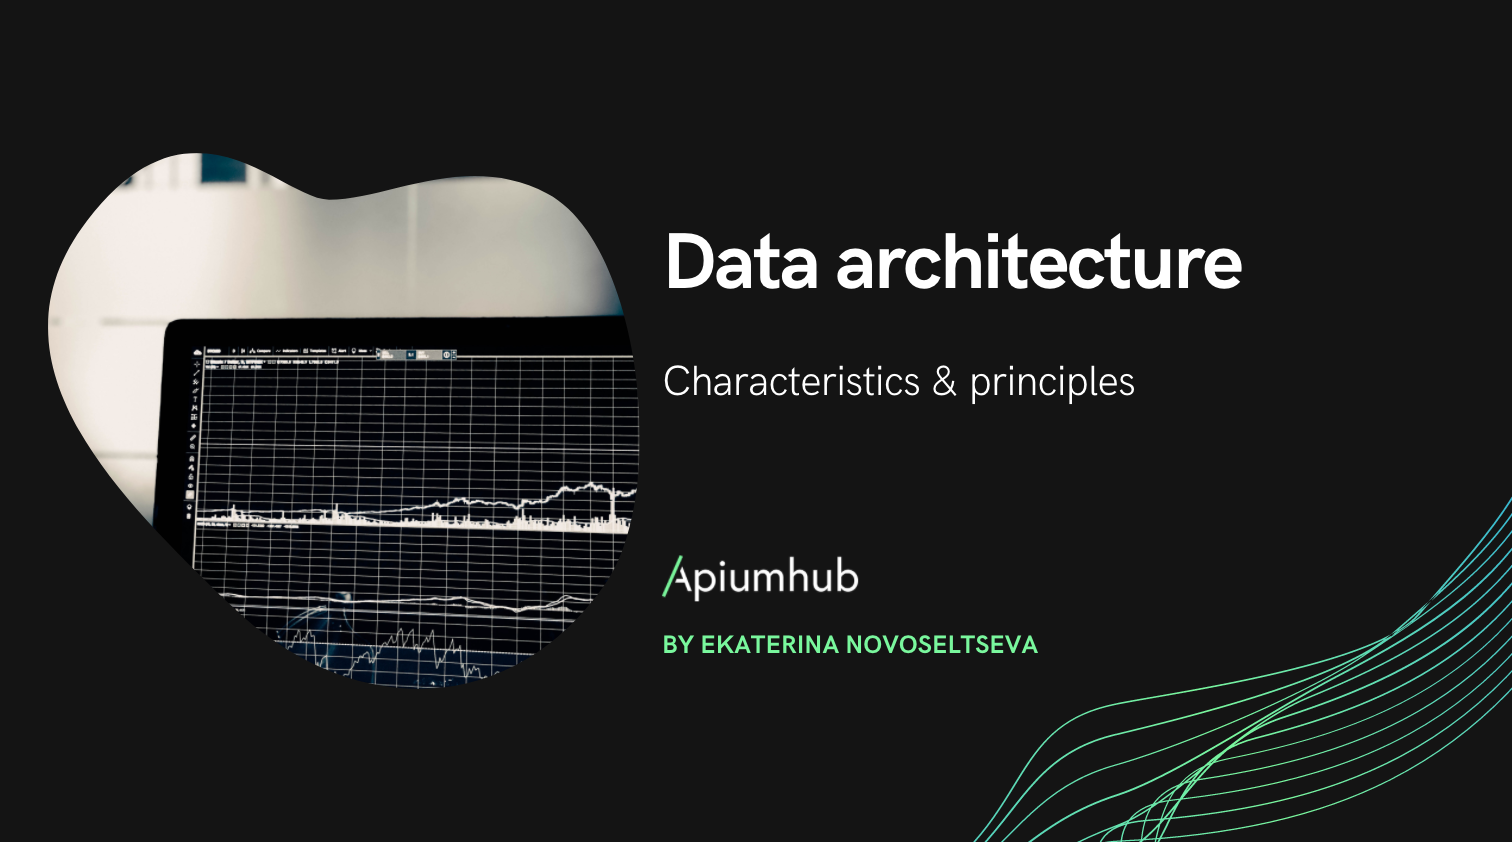 Data architecture characteristics & principles